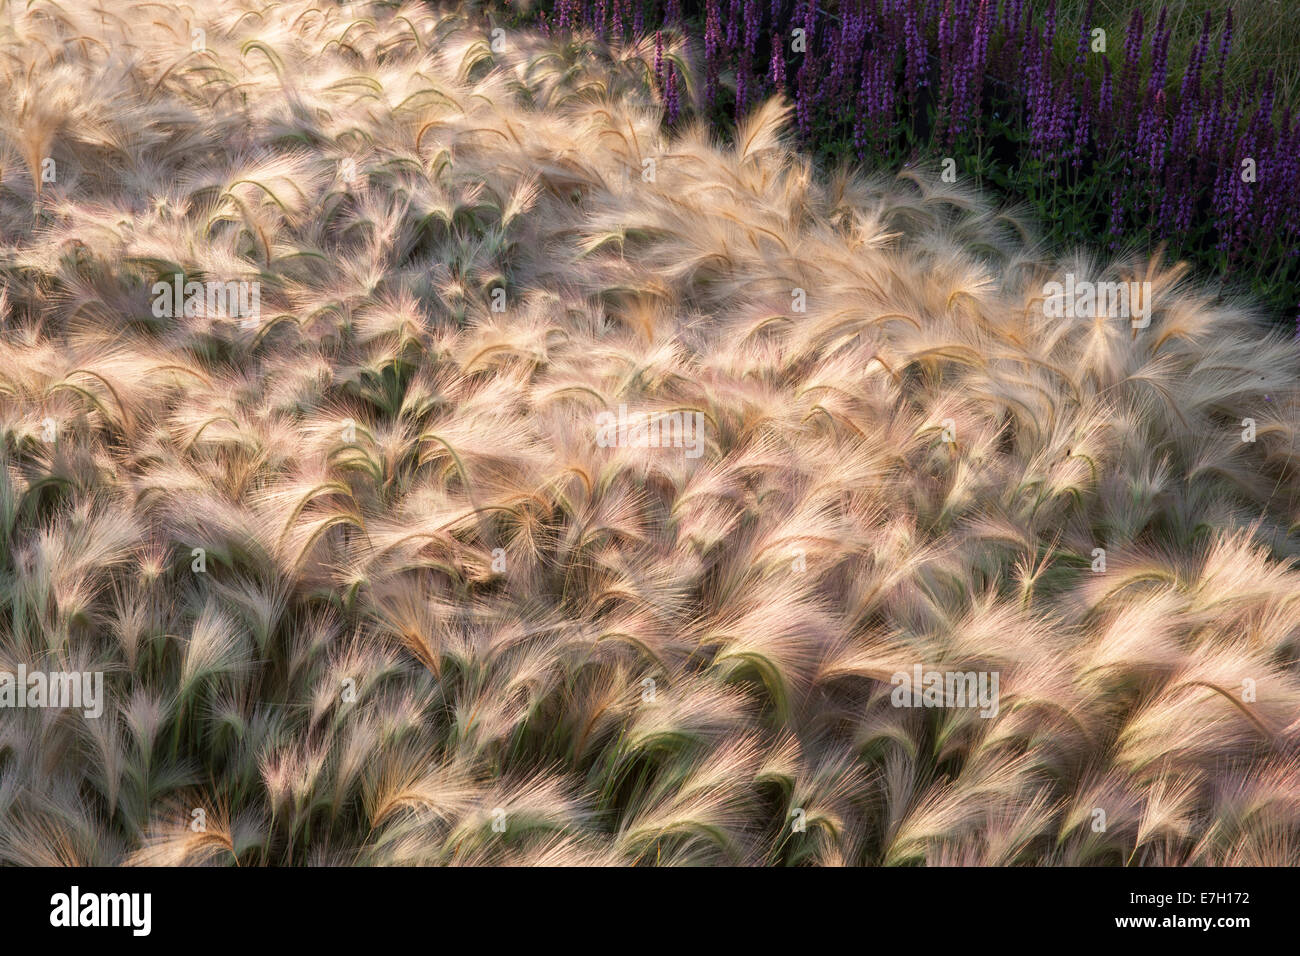 Garden - See the Wind - planting of Hordeum Jubatum ornamental barley grass Salvia nemorosa 'Amethyst' - Ornamental grass grasses border  UK Stock Photo